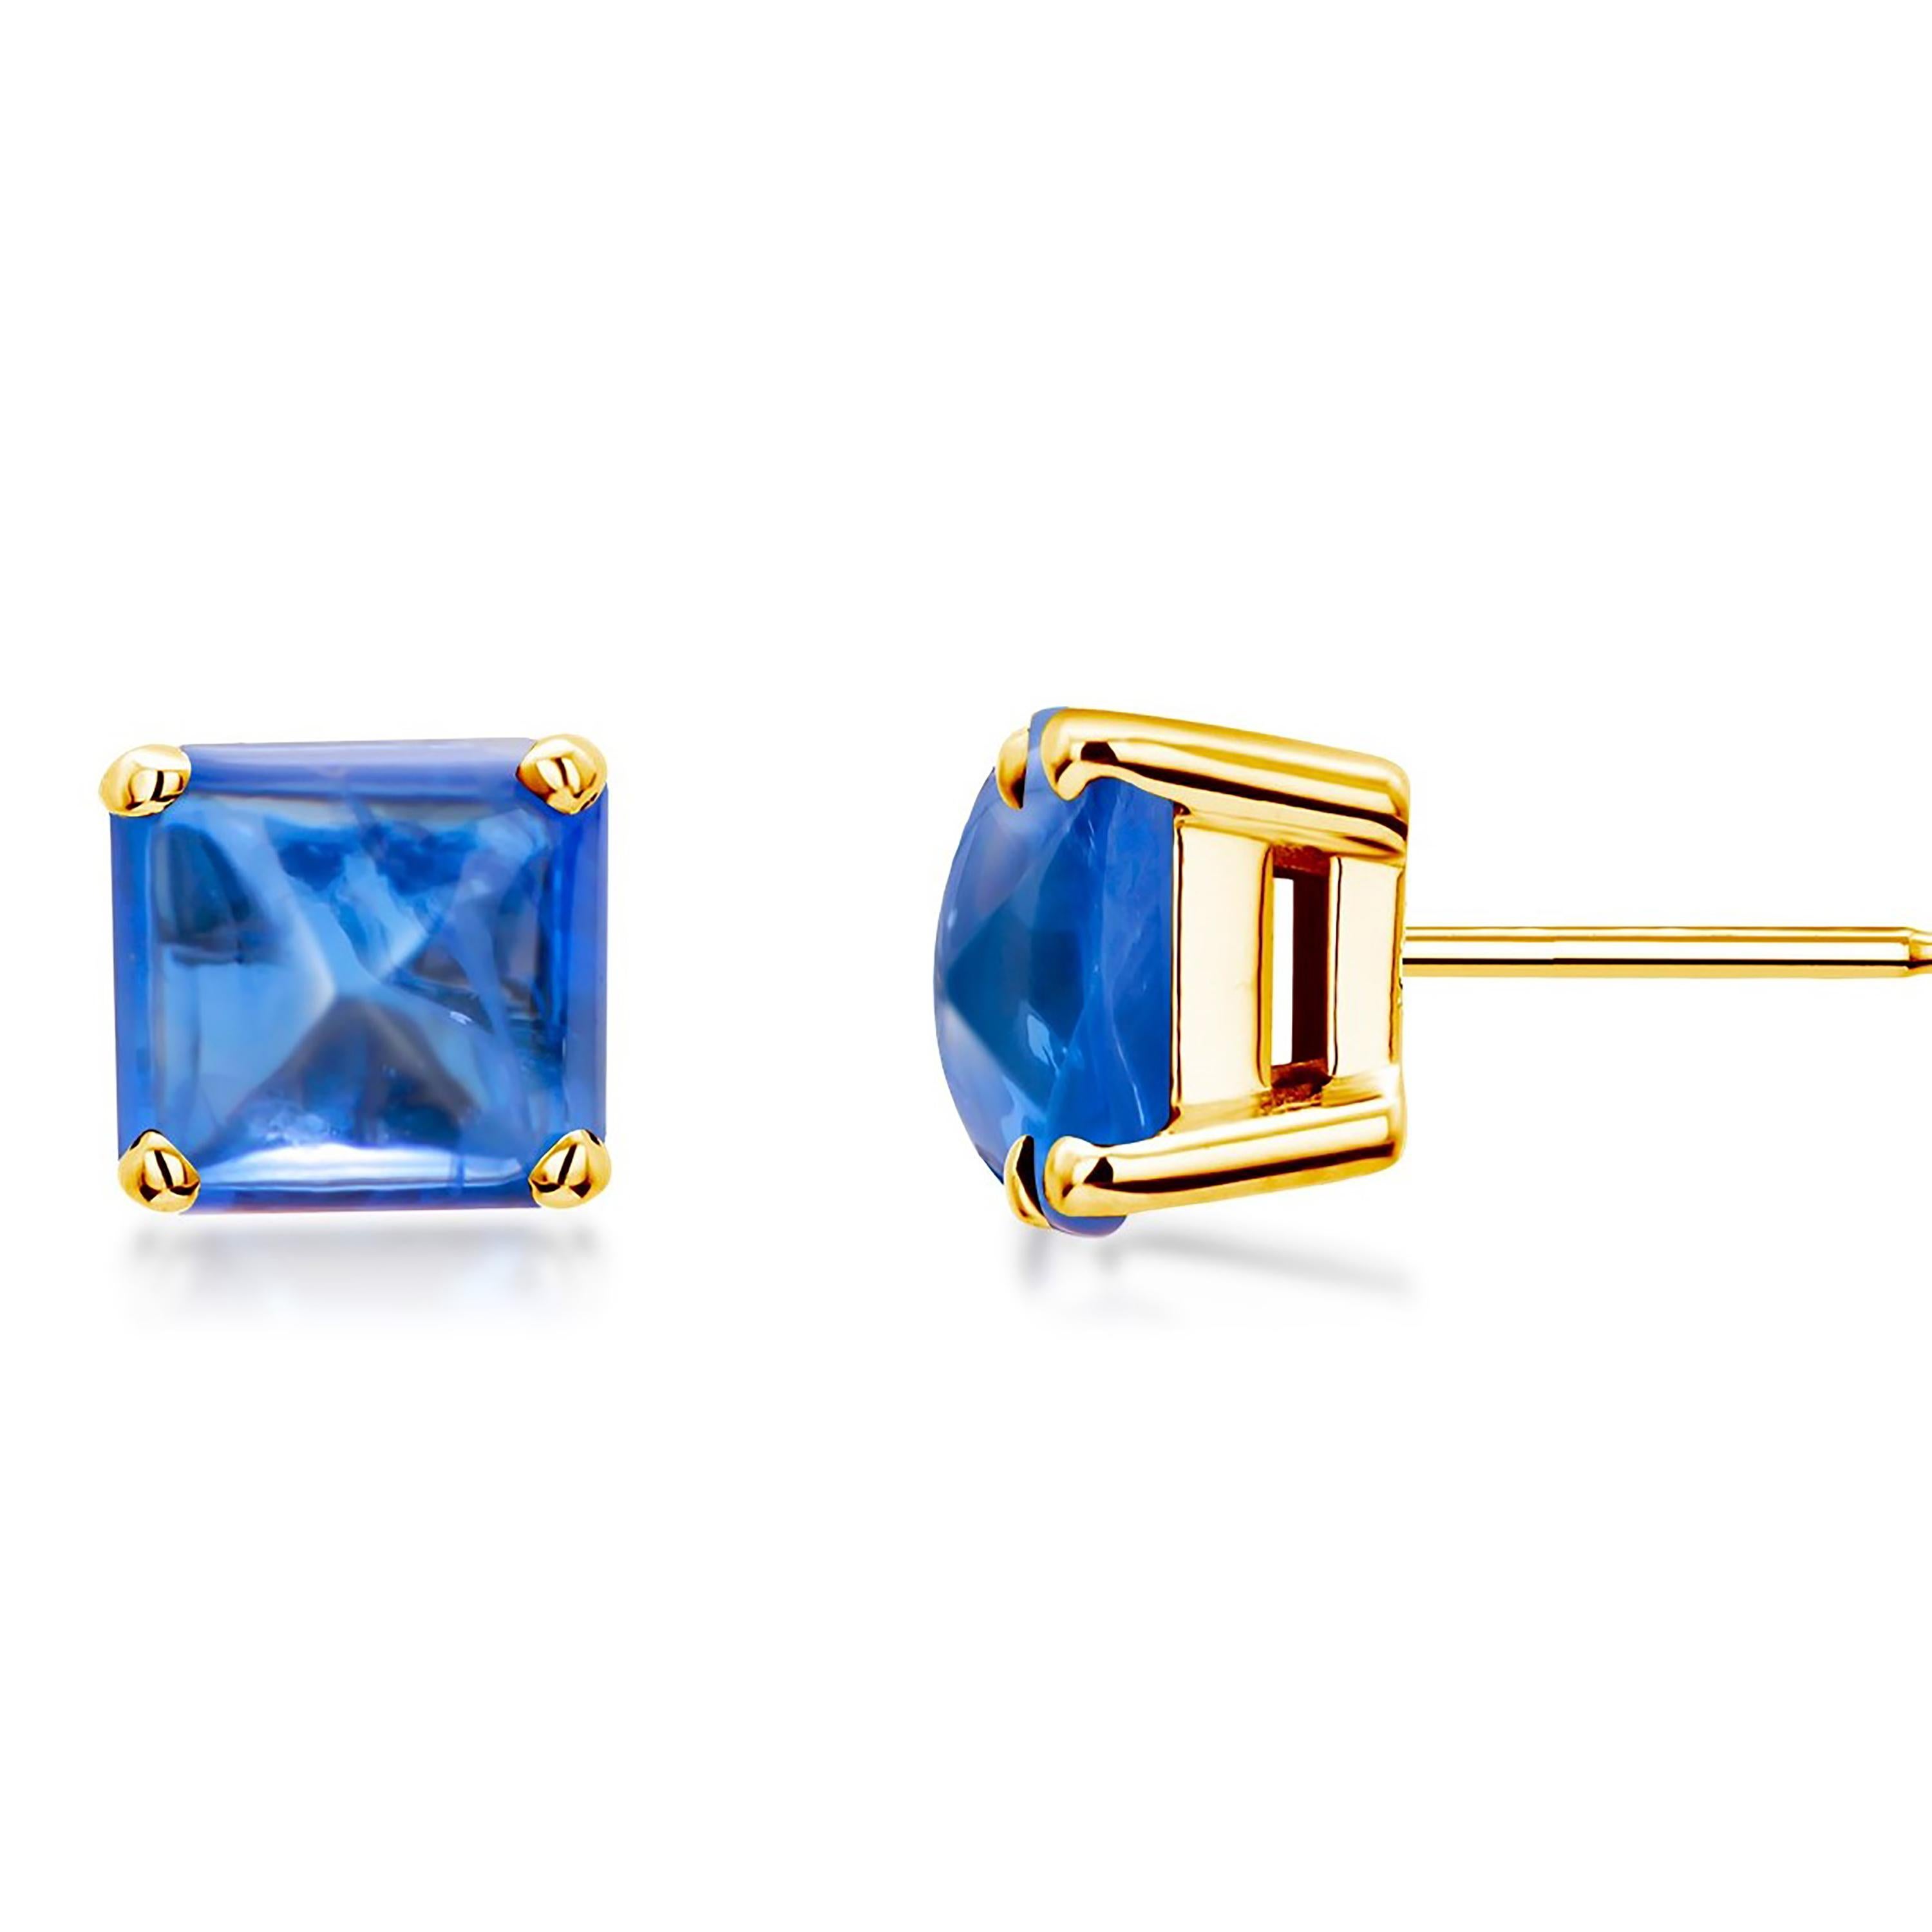 Emerald Cut Square Emerald Shaped Sugarloaf Ceylon Cabochon Sapphire Gold Stud Earrings